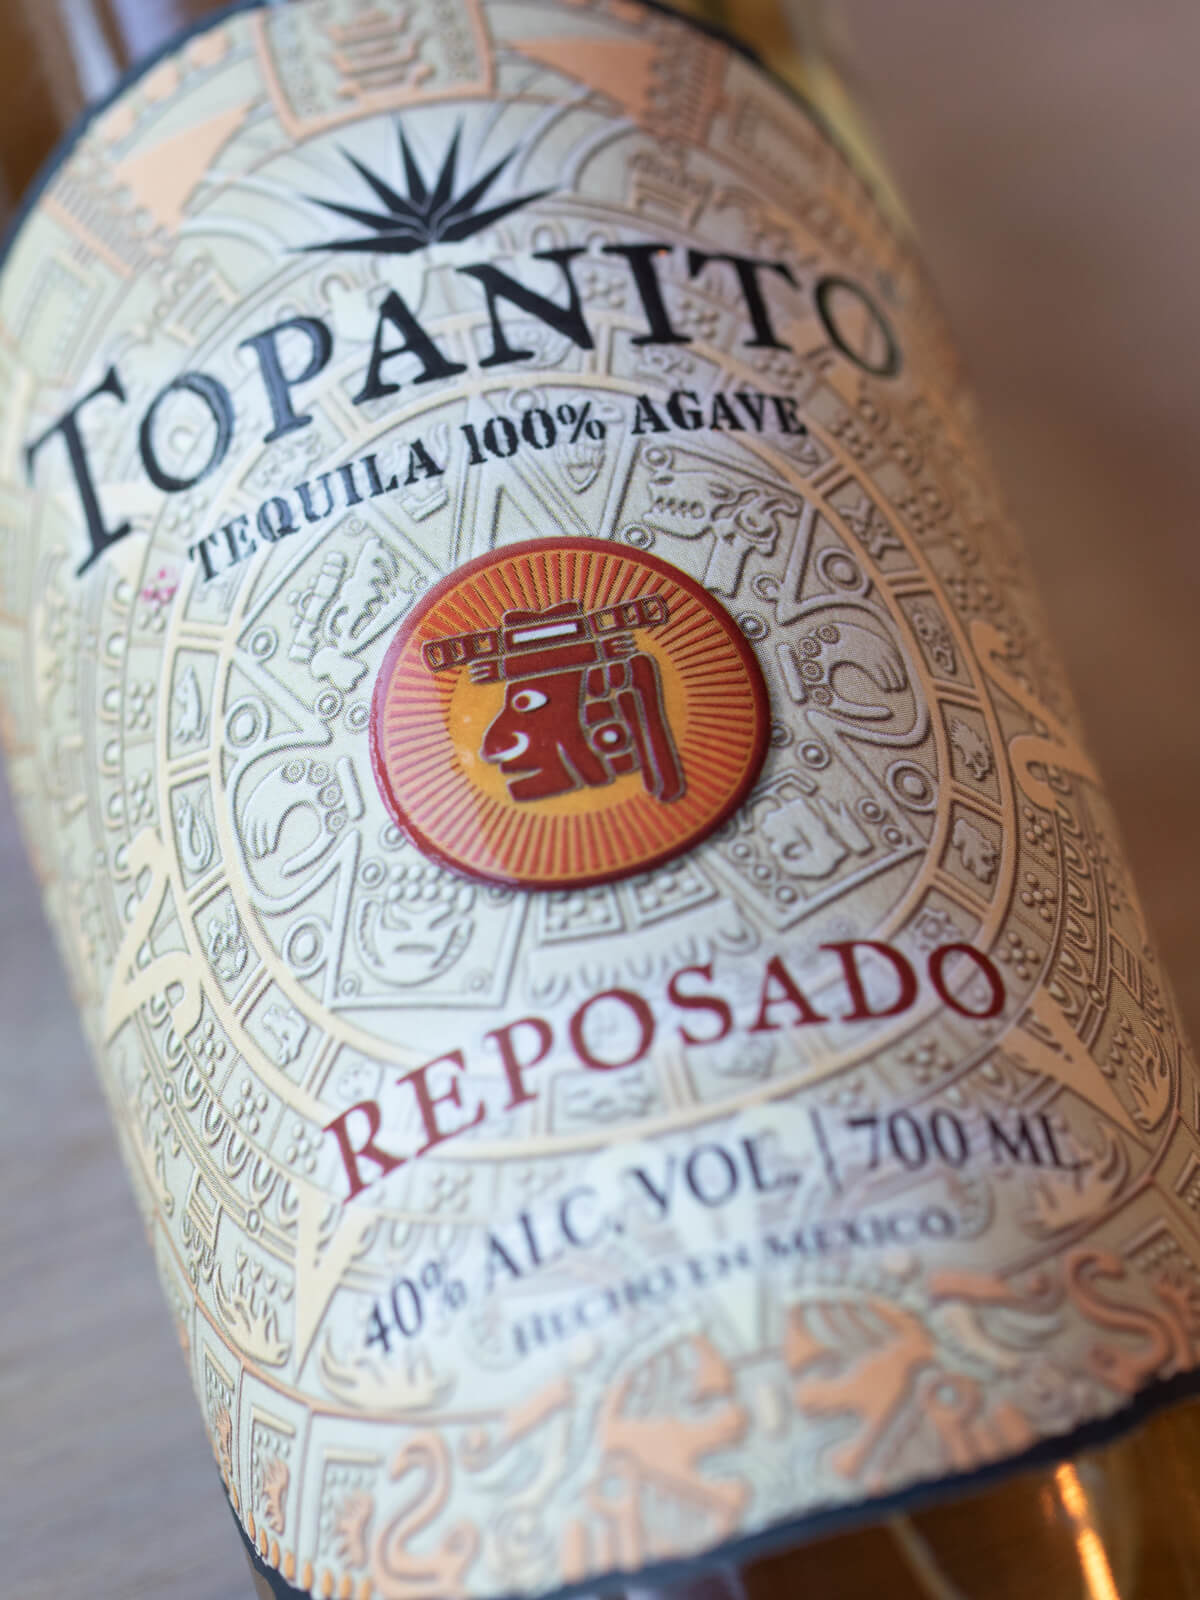 Topanito Reposado Tequila im Tequila Cocktail Set von Drink Syndikat